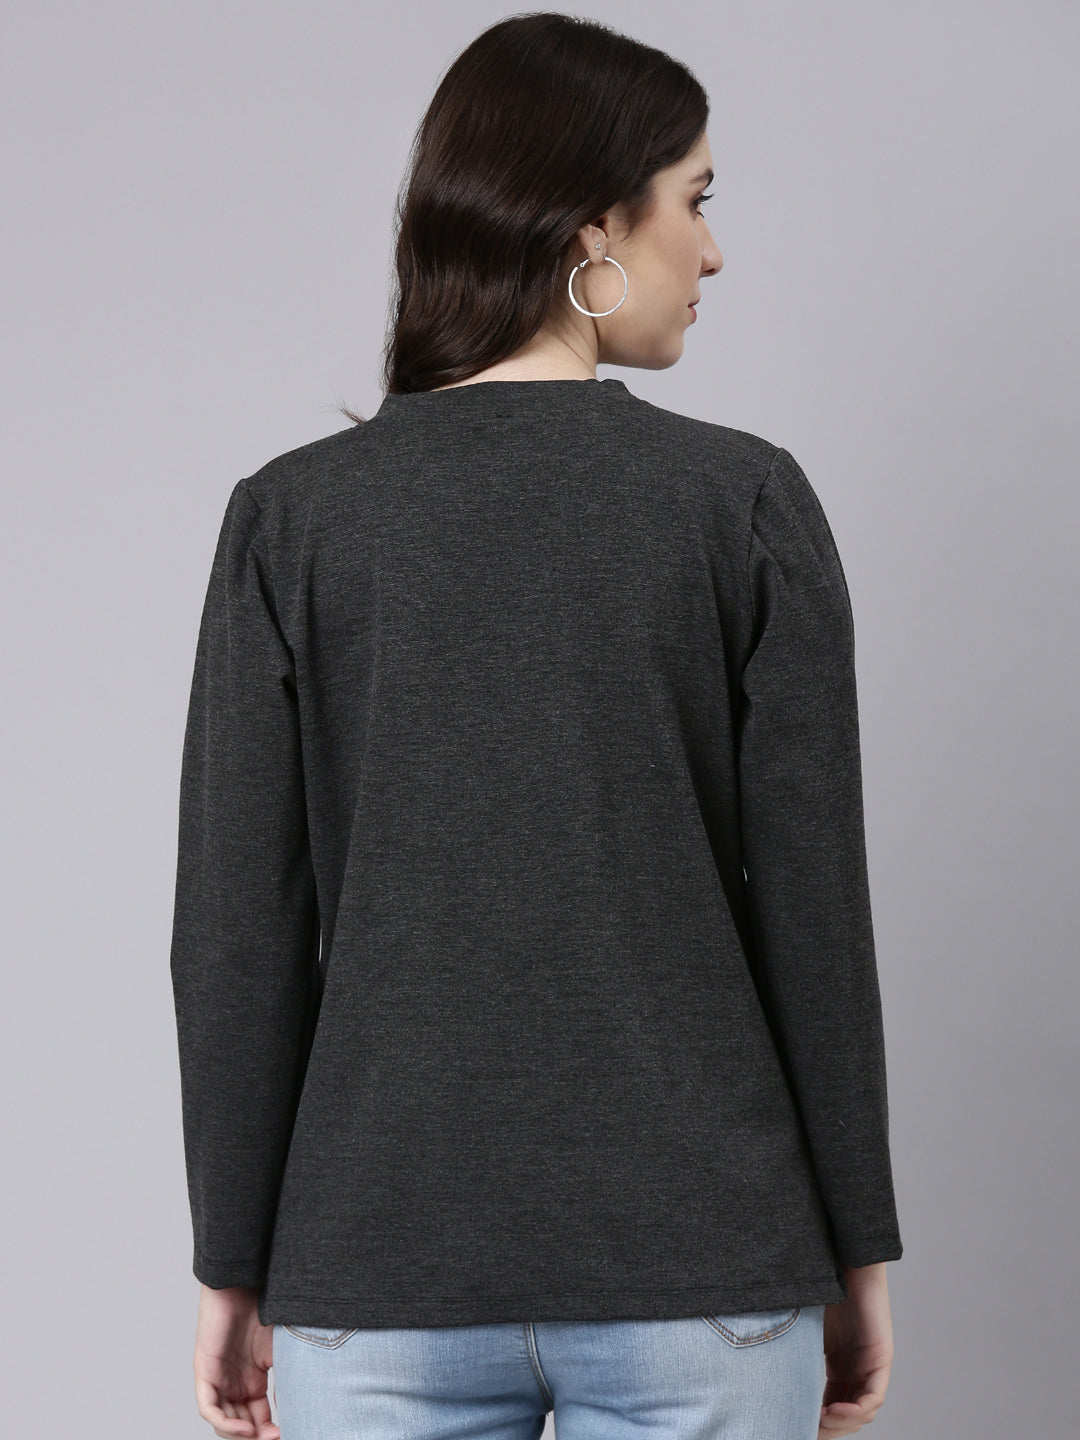 TheShaili Stretchable Cotton Jacket for Women | Full Sleeves | Zipper Closing - Casual Jacket for Women Grey melange